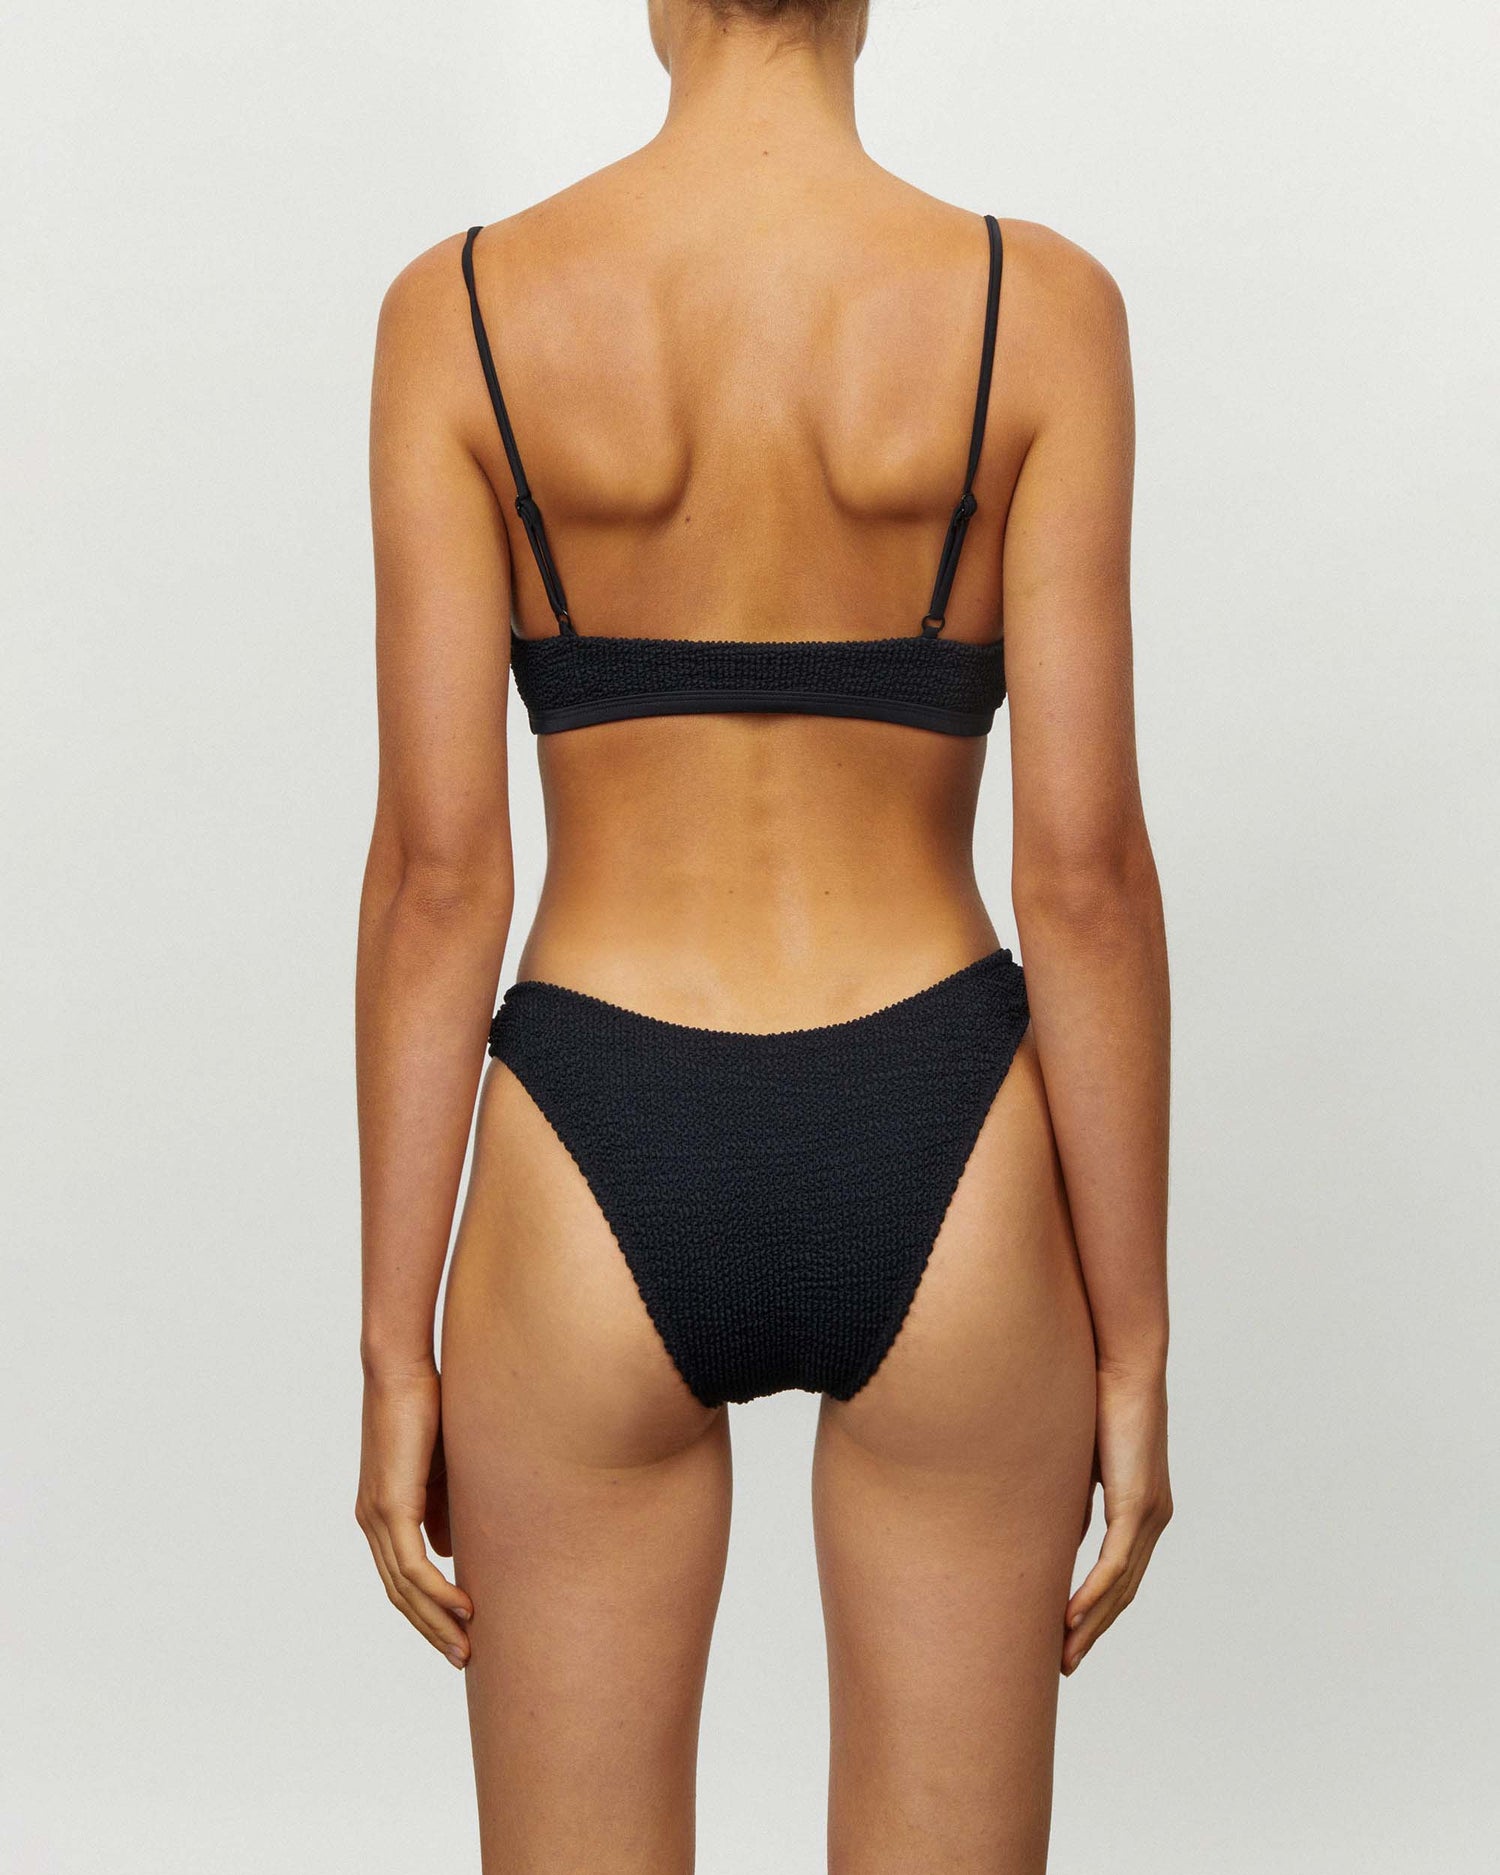 It's Now Cool Swimwear - Crop Top - Crimped Black